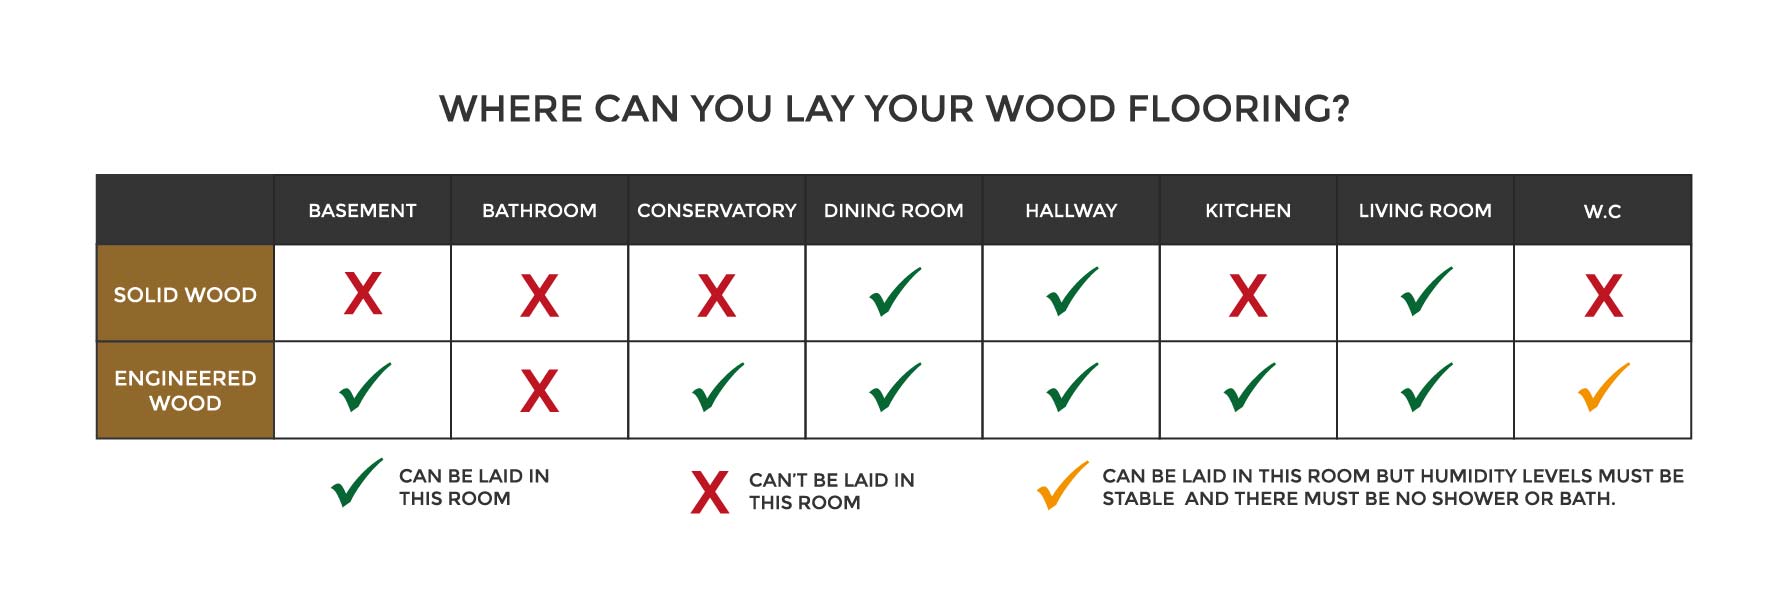 Where can I lay my wood flooring?